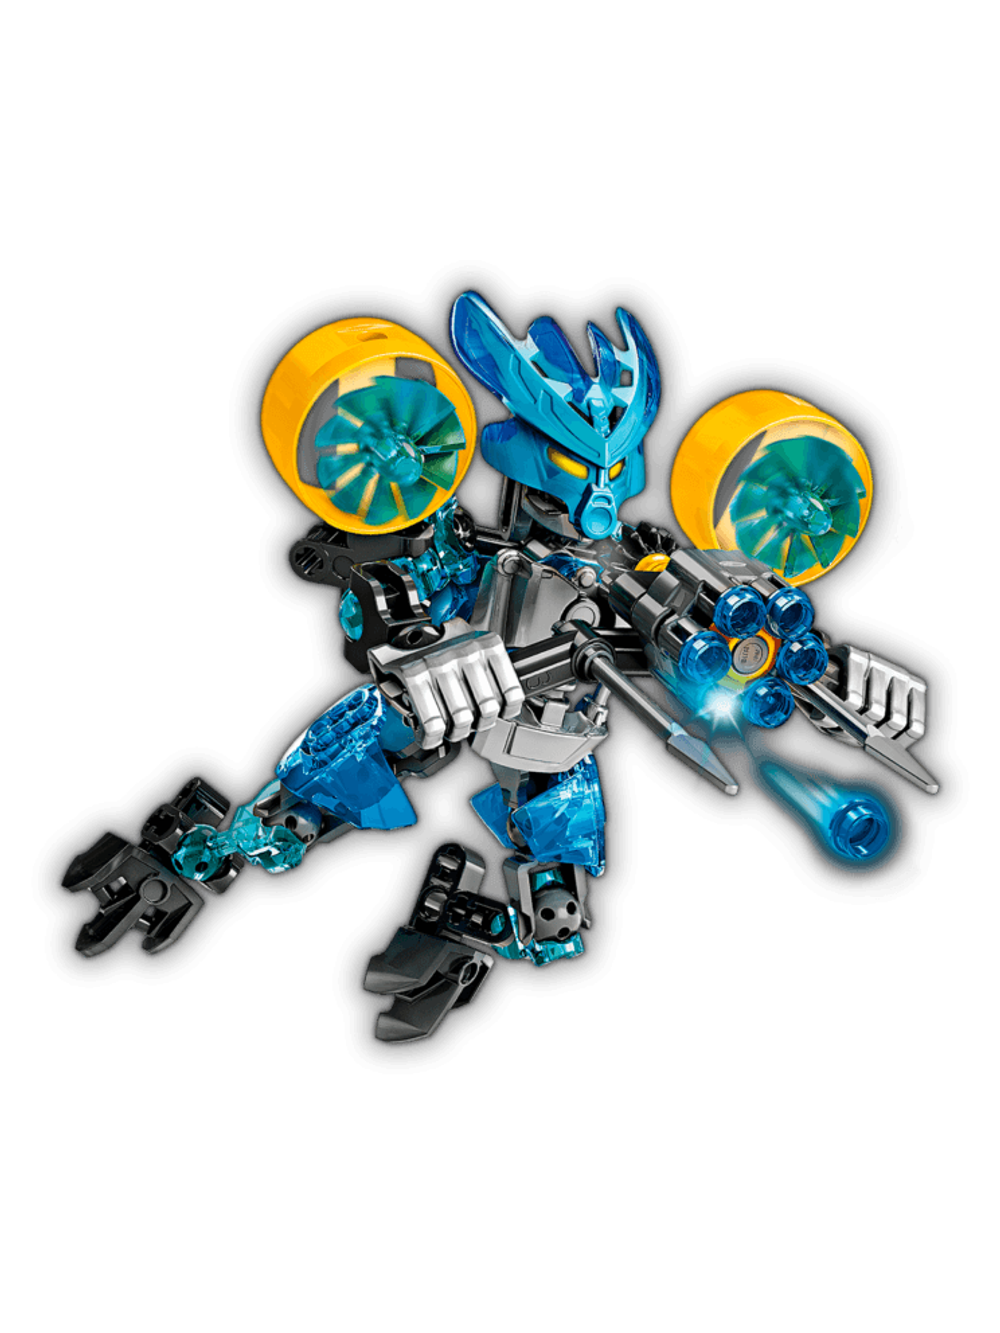 LEGO Bionicle: Страж Воды 70780 — Protector of Water — Лего Бионикл